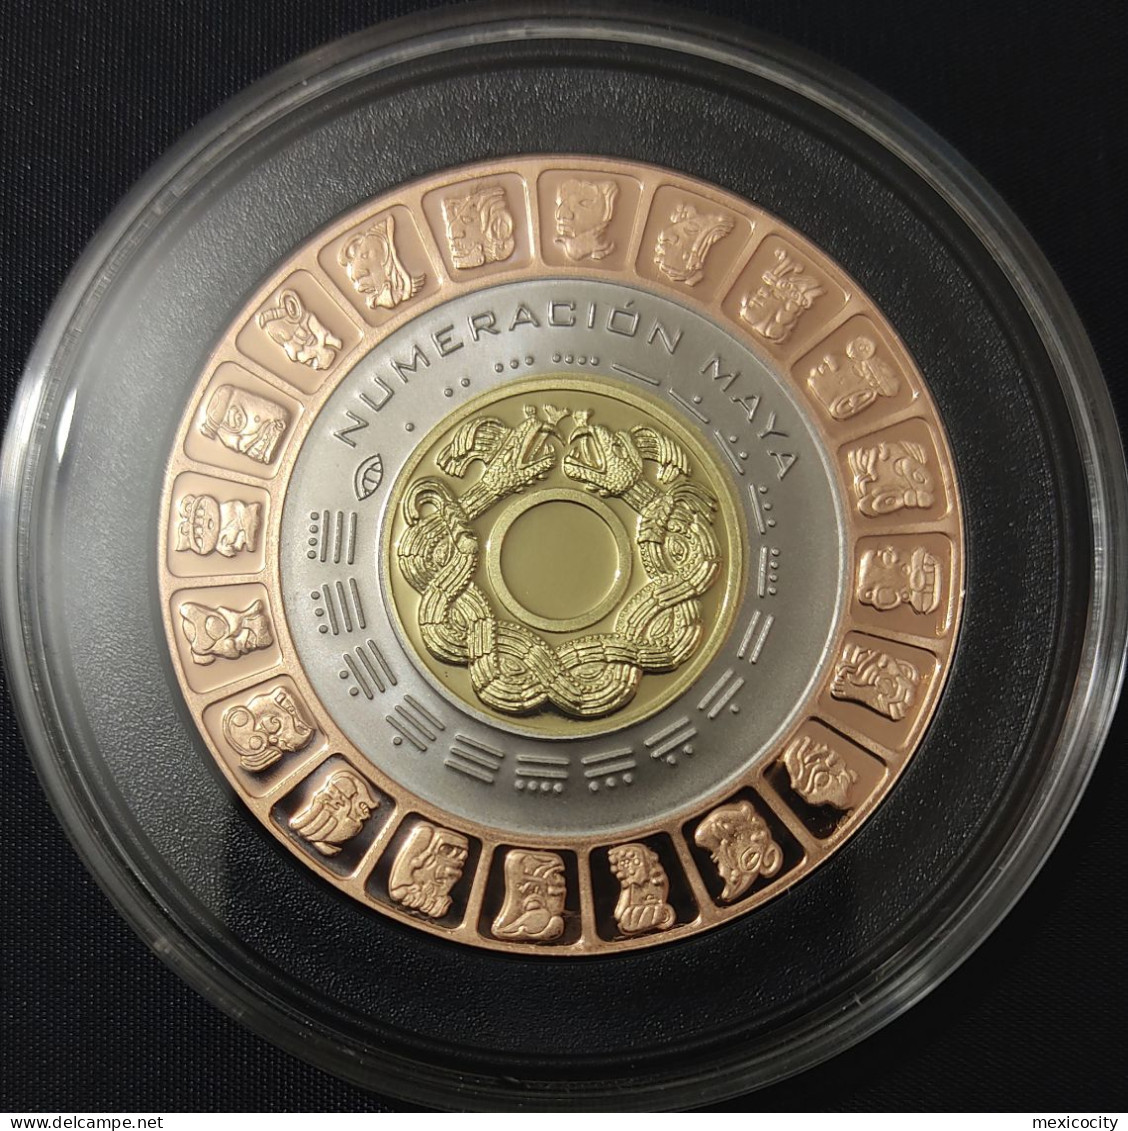 MEXICO Mint MAYAN CULTURE Trimetallic Piece, PROOF In Capsule, Heavy, Rare, Beautiful - Mexico